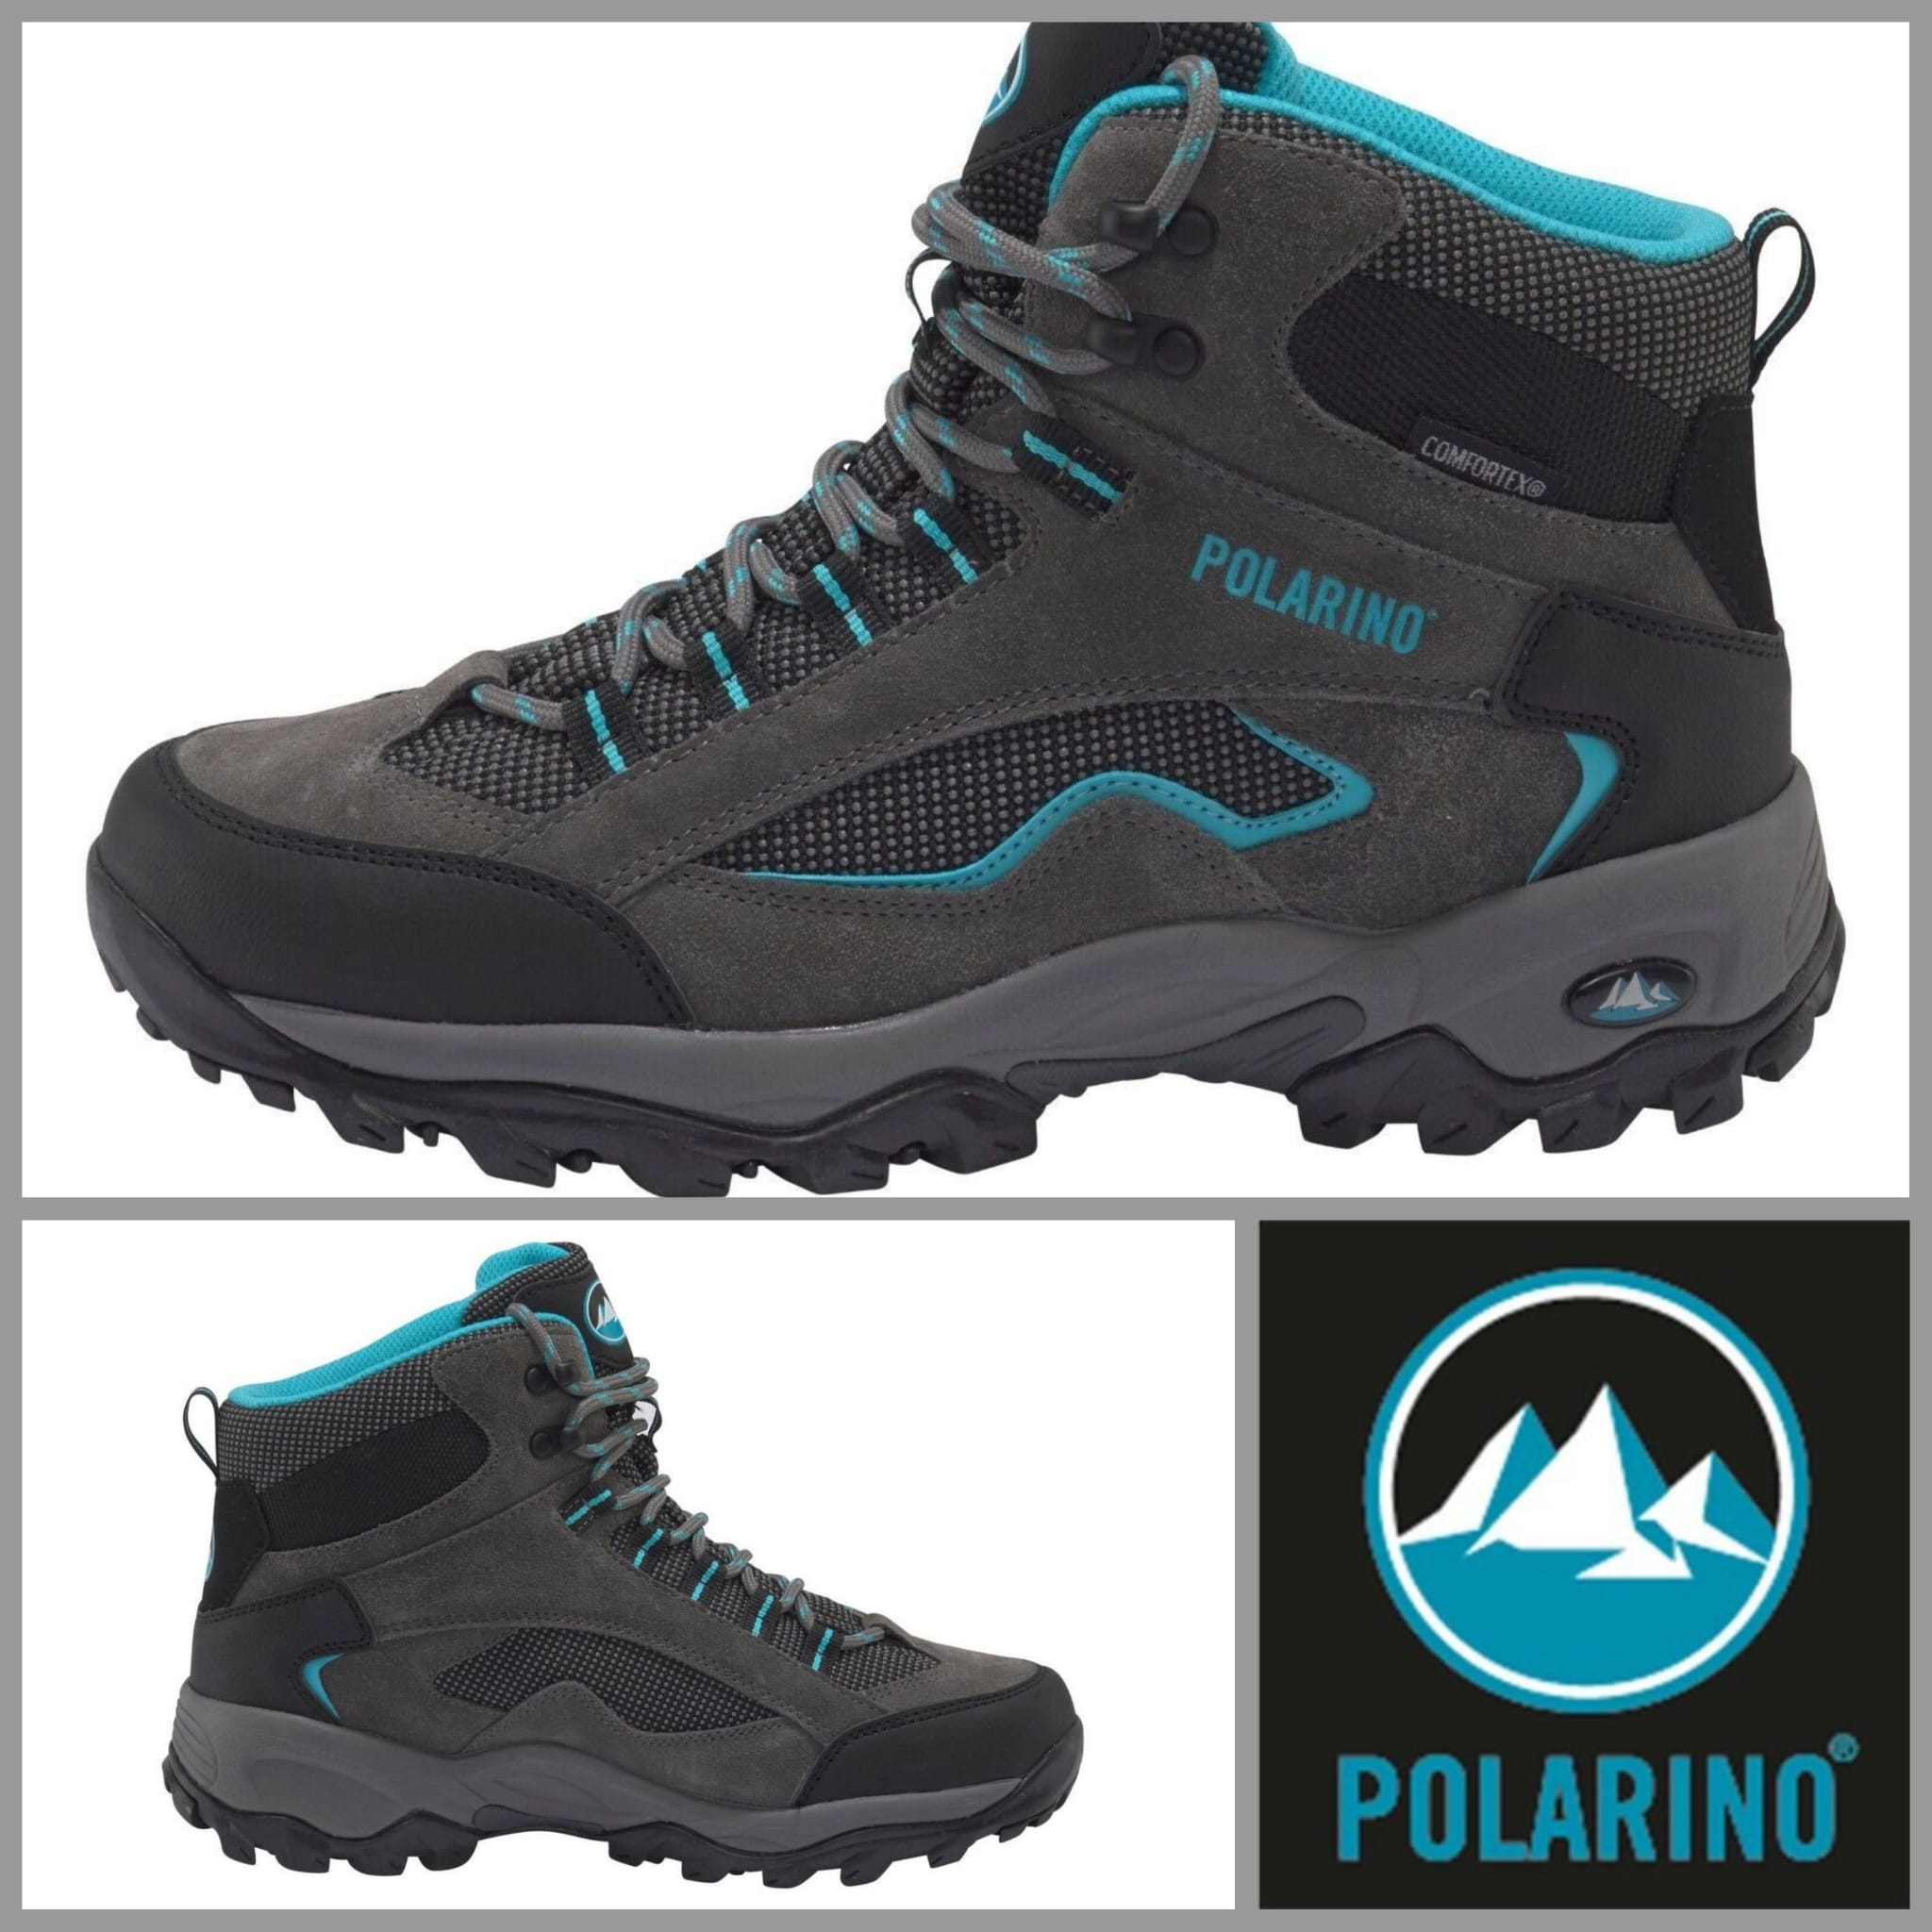 Polarino trekking boots